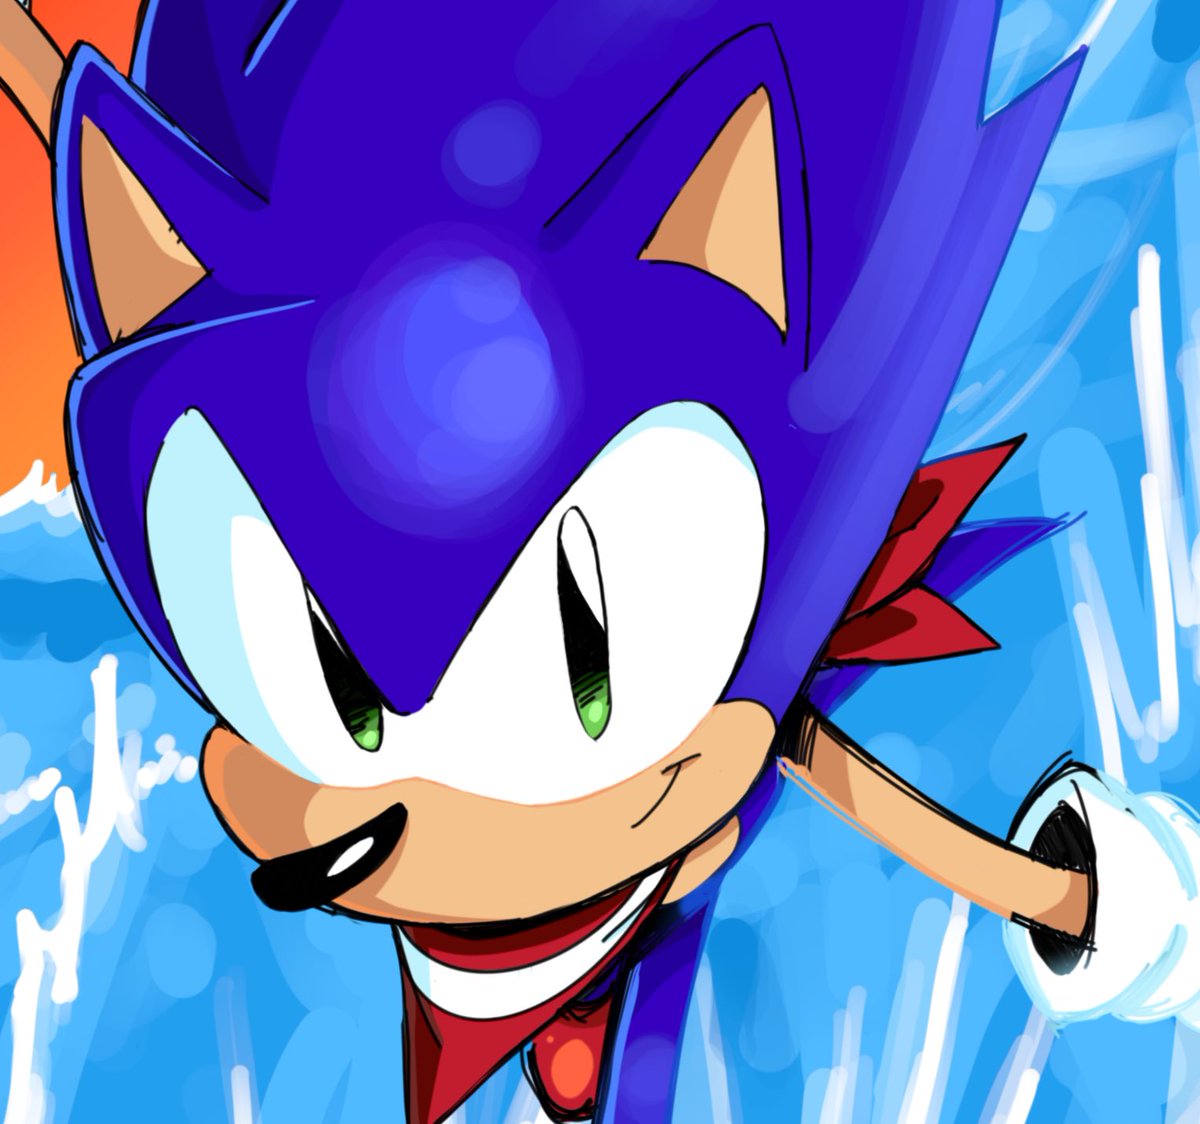 He's out for a jog 

#SonicTheHedgehog 
#SonicArtist 
#SonicFanart
#Sonic30th 
#Sonic
#Rkgk 